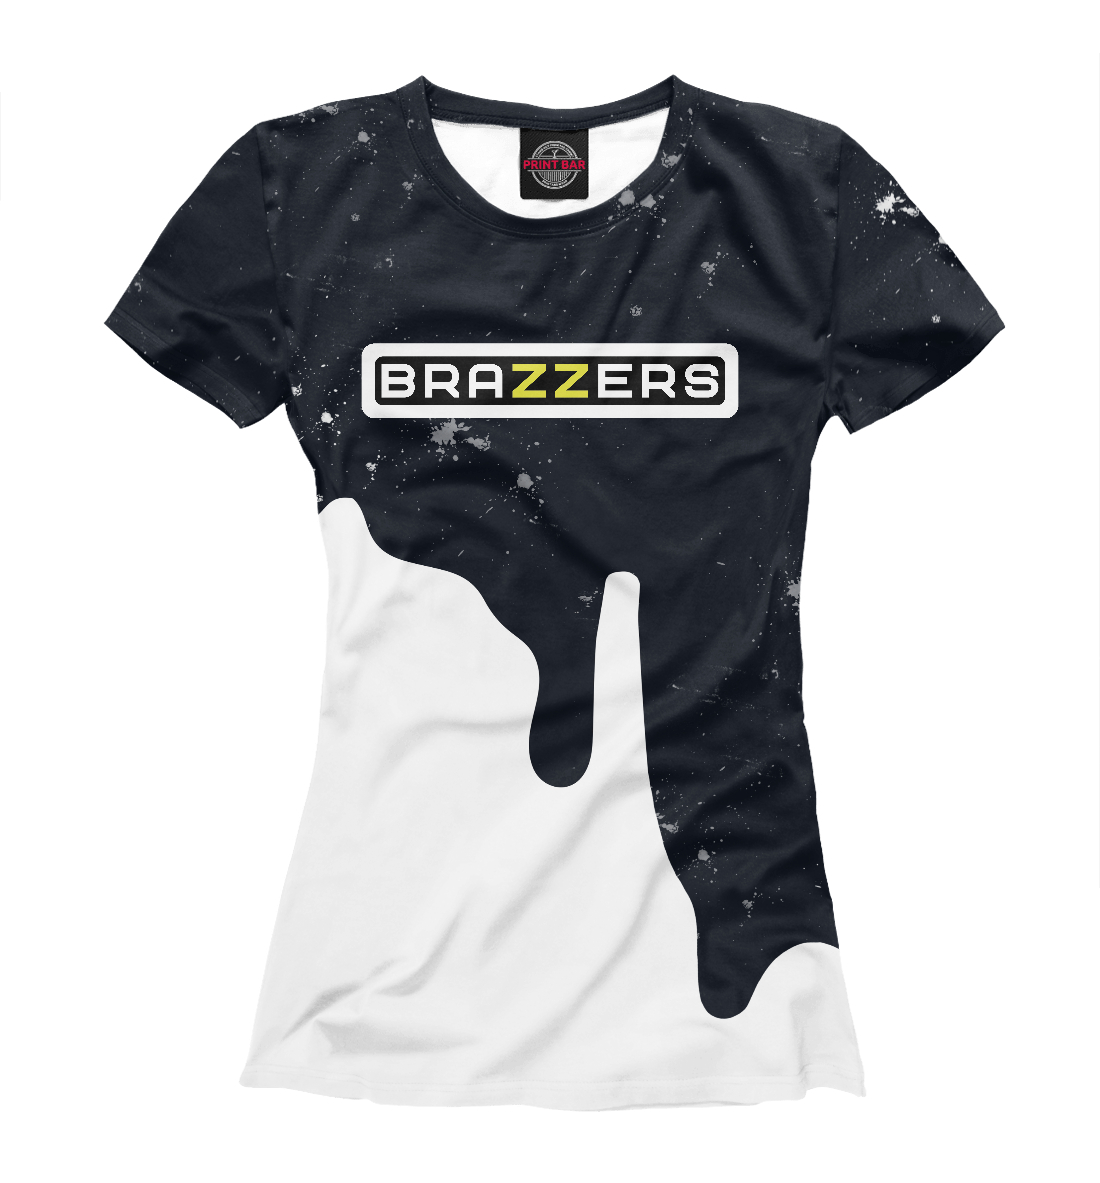 Женская Футболка с надписью Brazzers, артикул BRZ-108057-fut-1mp